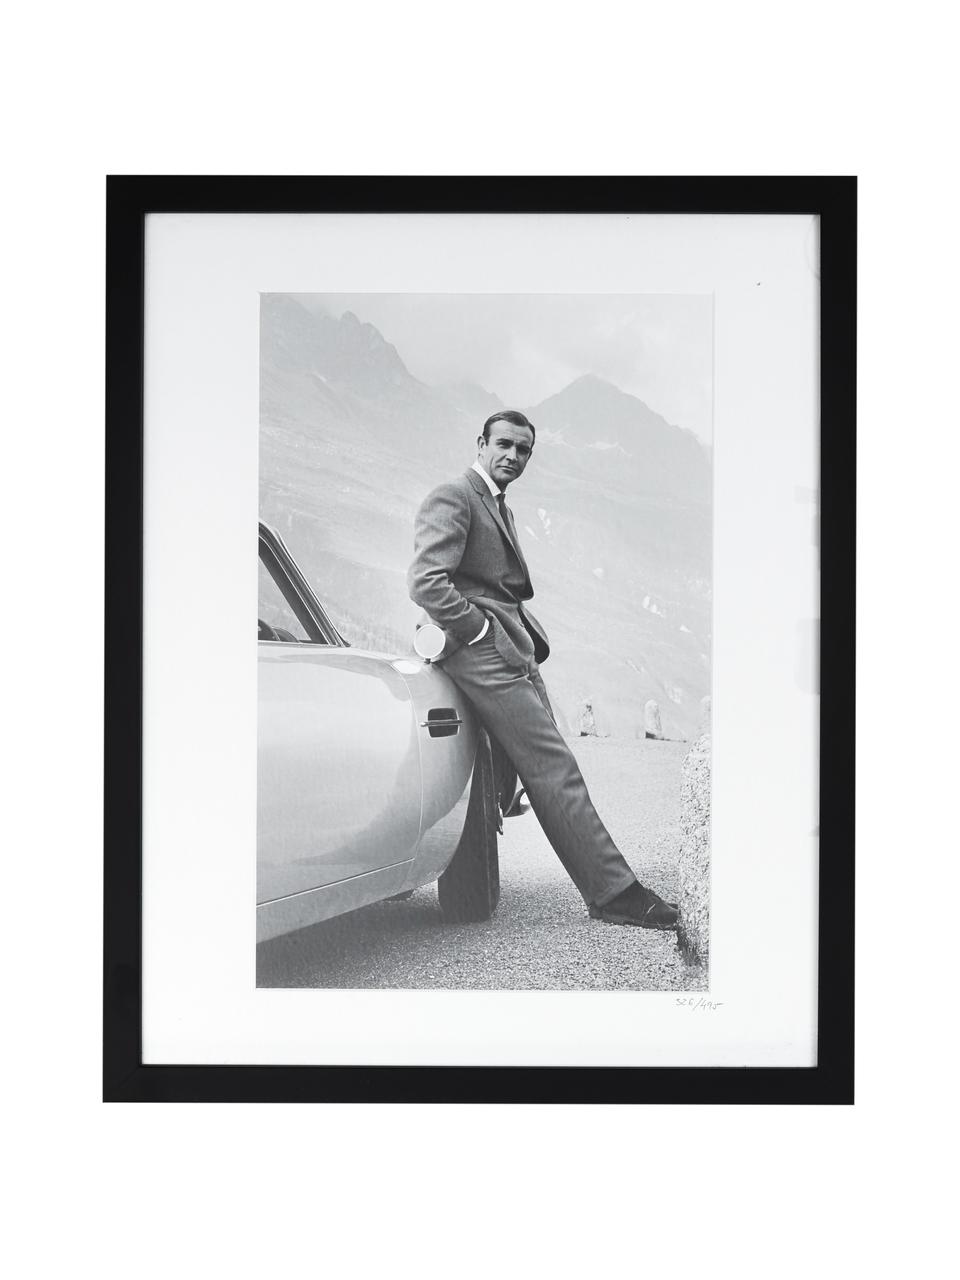 Ingelijste fotoprint Connery, Afbeelding: Fuji Crystal Archive-papi, Lijst: plexiglas, gelakt hout, Zwart, wit, 40 x 50 cm